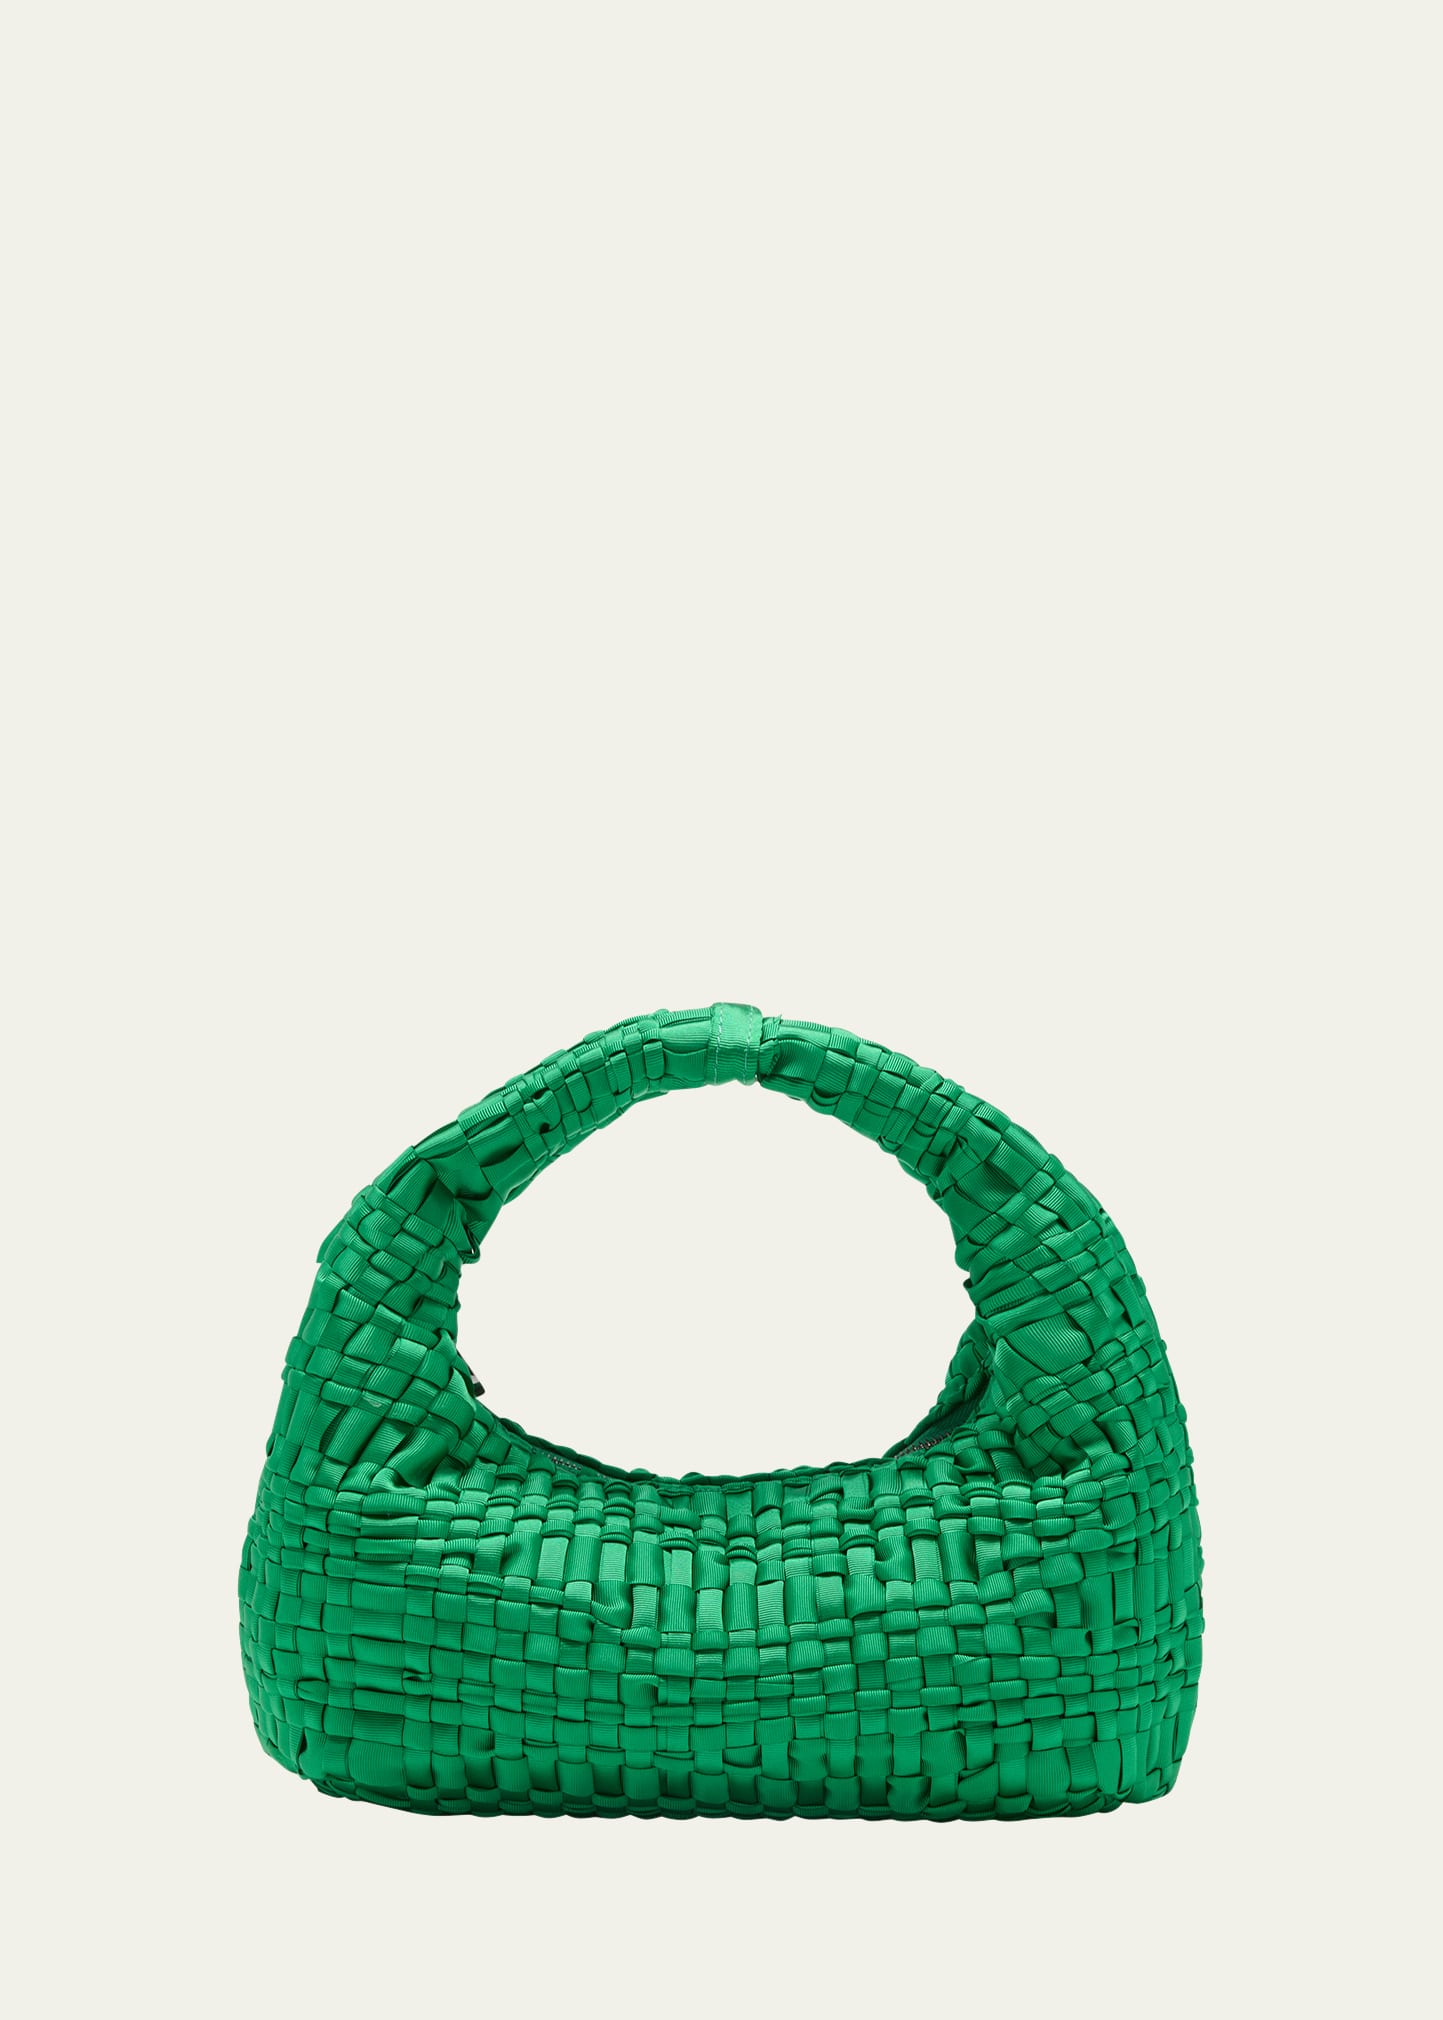 Maria La Rosa Rebirth Woven Ribbon Top-handle Bag In Emerald 4260